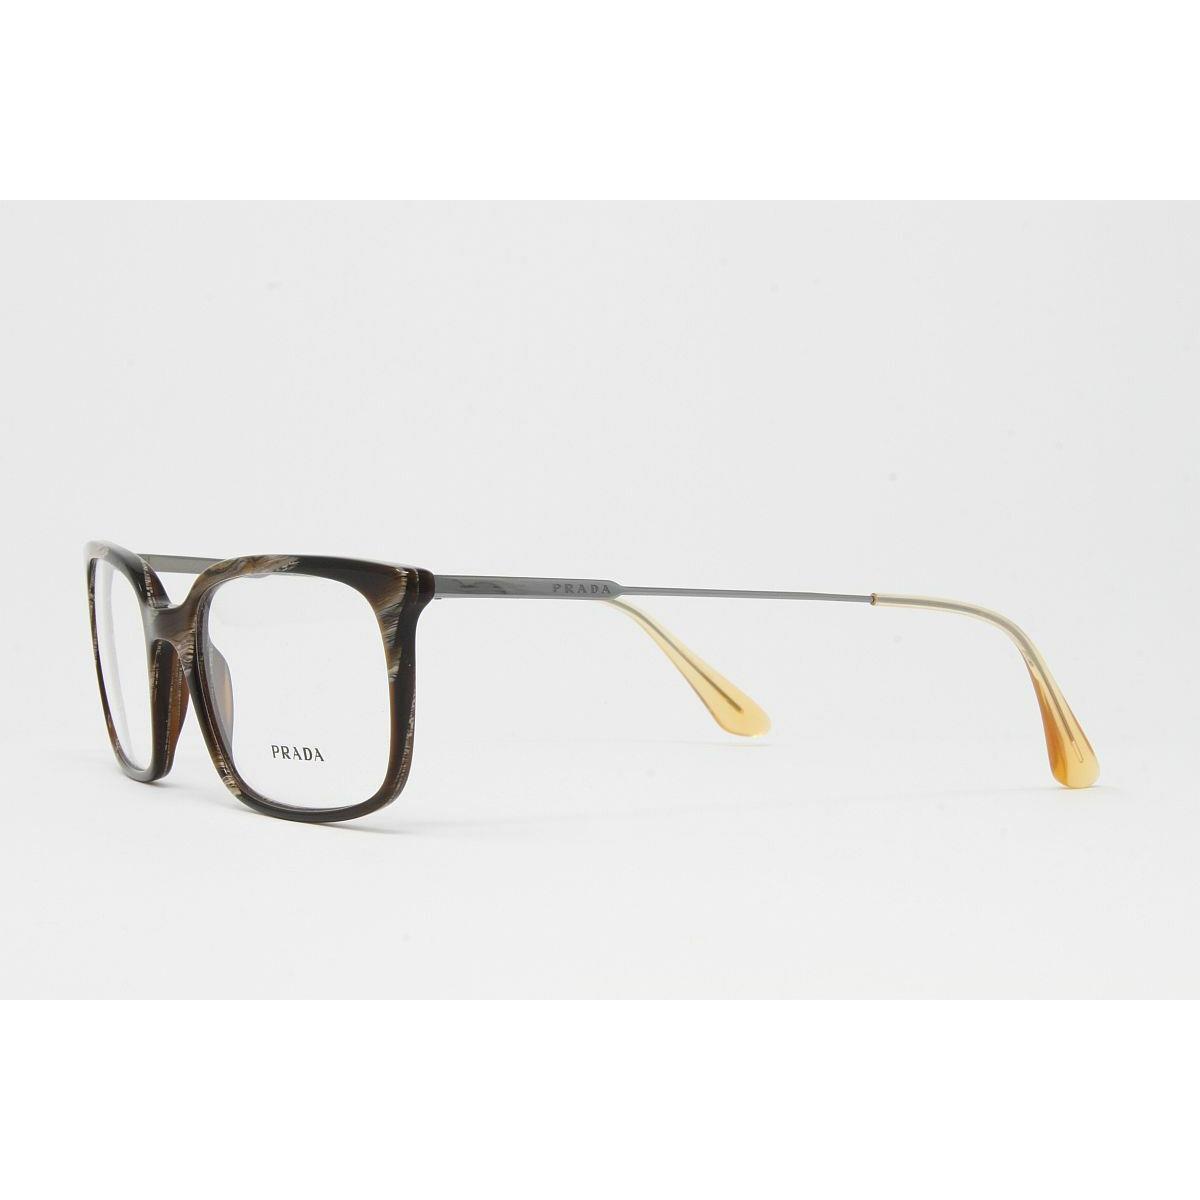 Prada eyeglasses  - Brown Frame 1